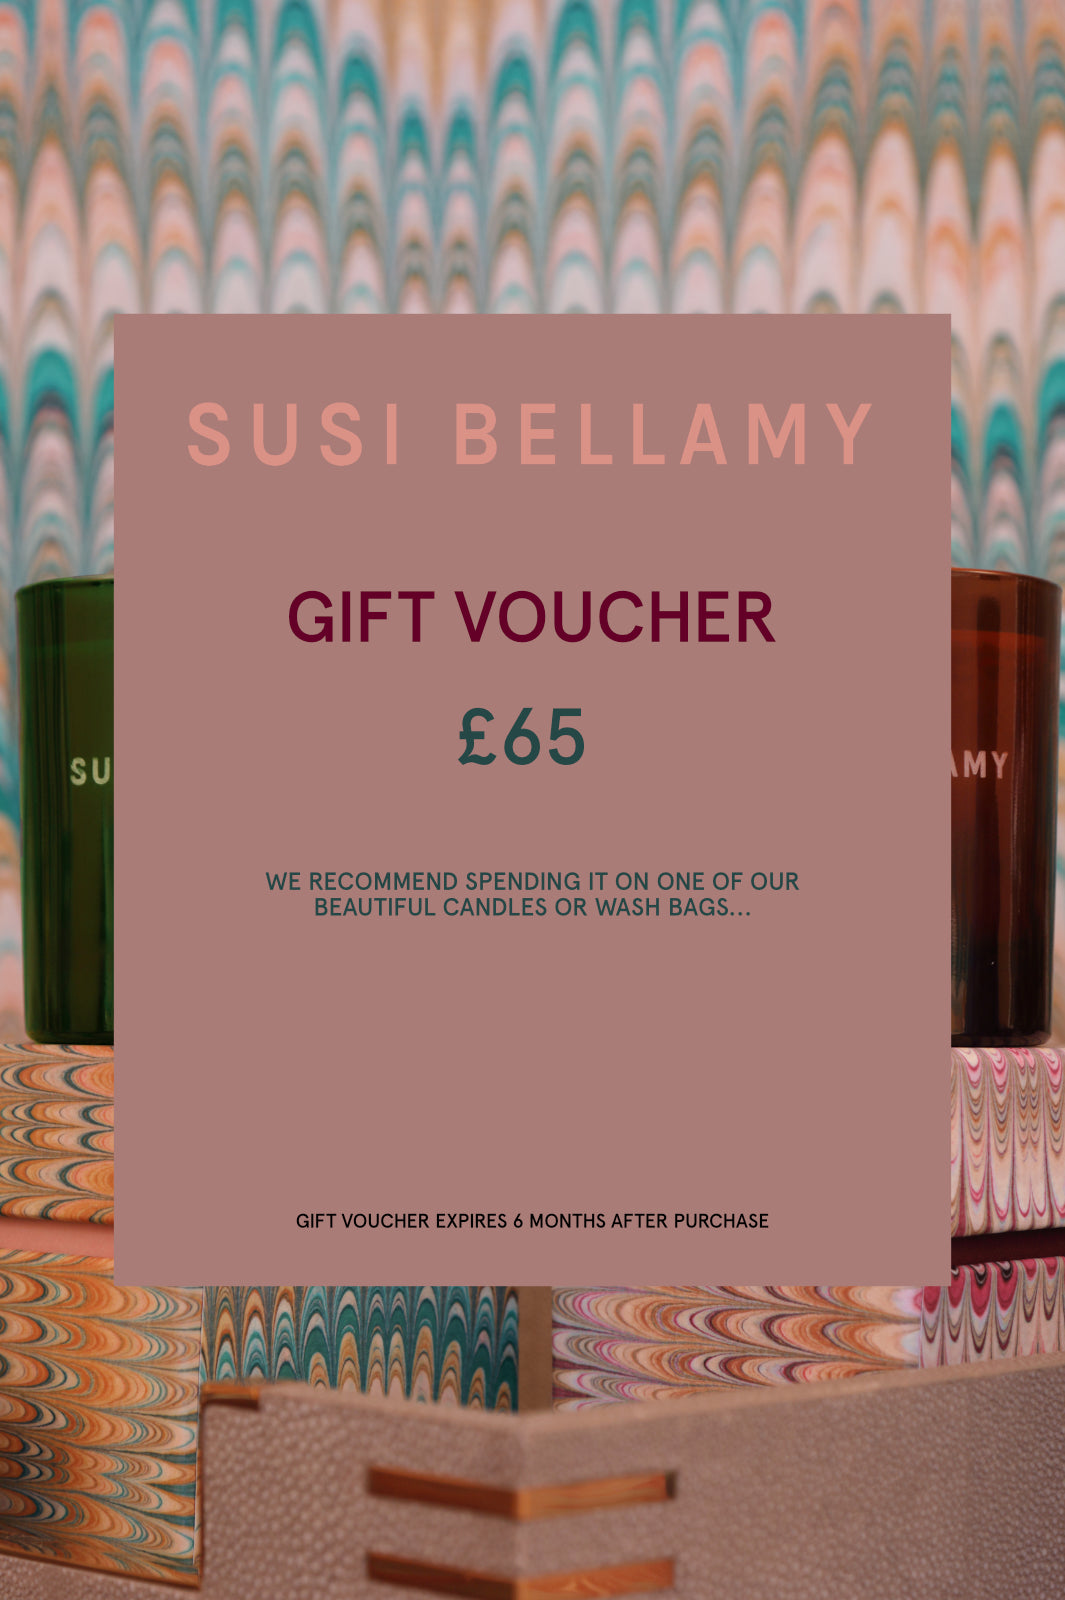 Susi Bellamy Gift Voucher for £65